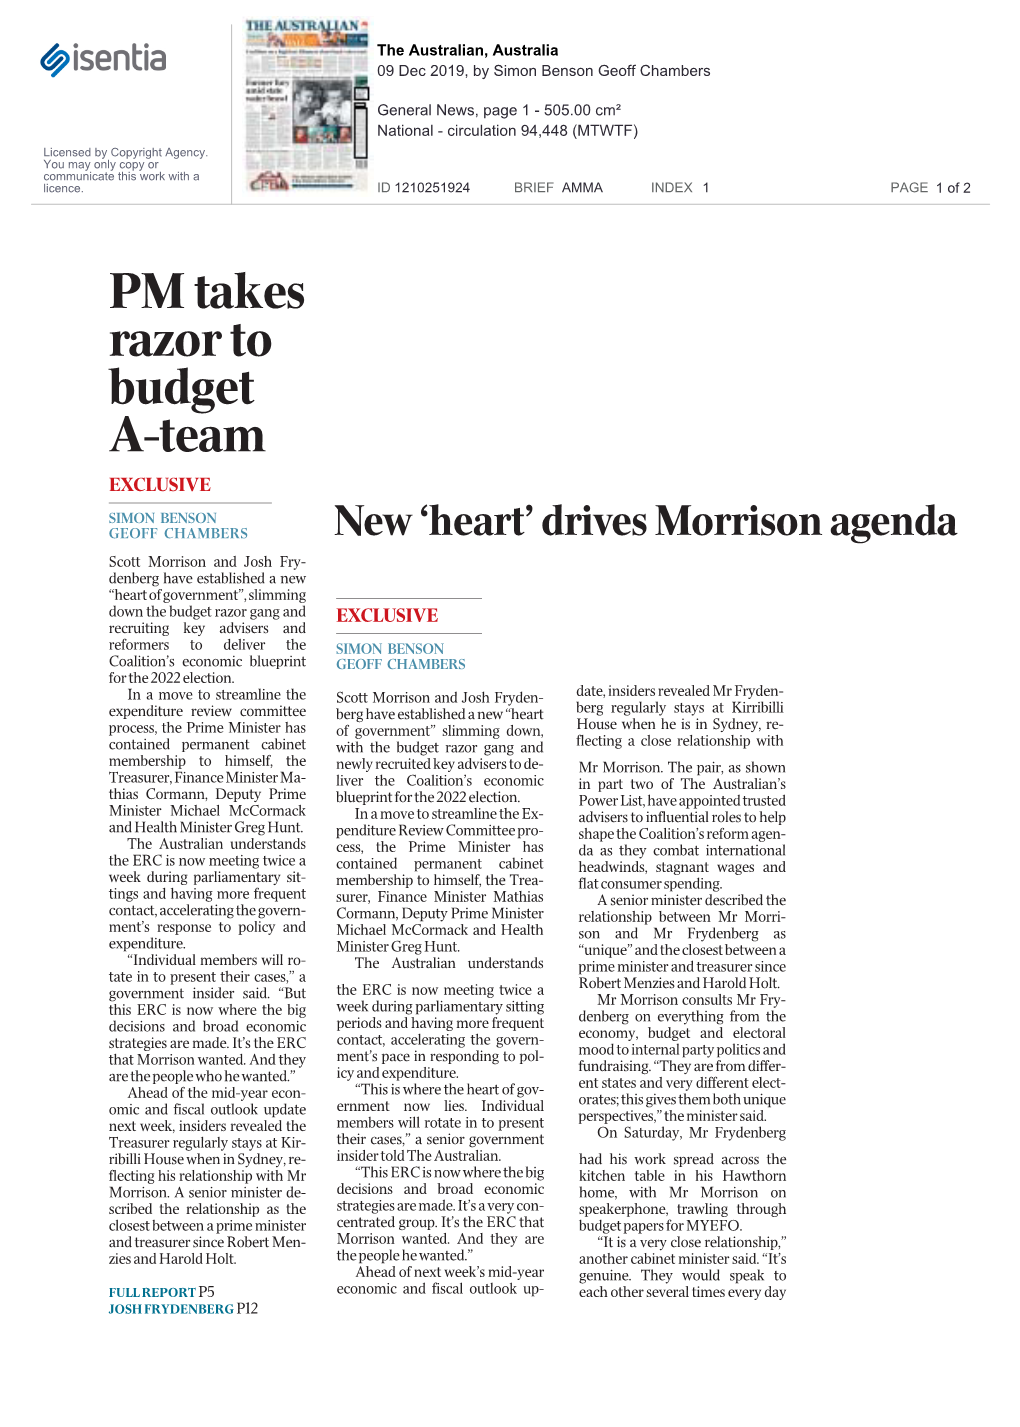 PM-Takes-Razor-To-Budget-A-Team